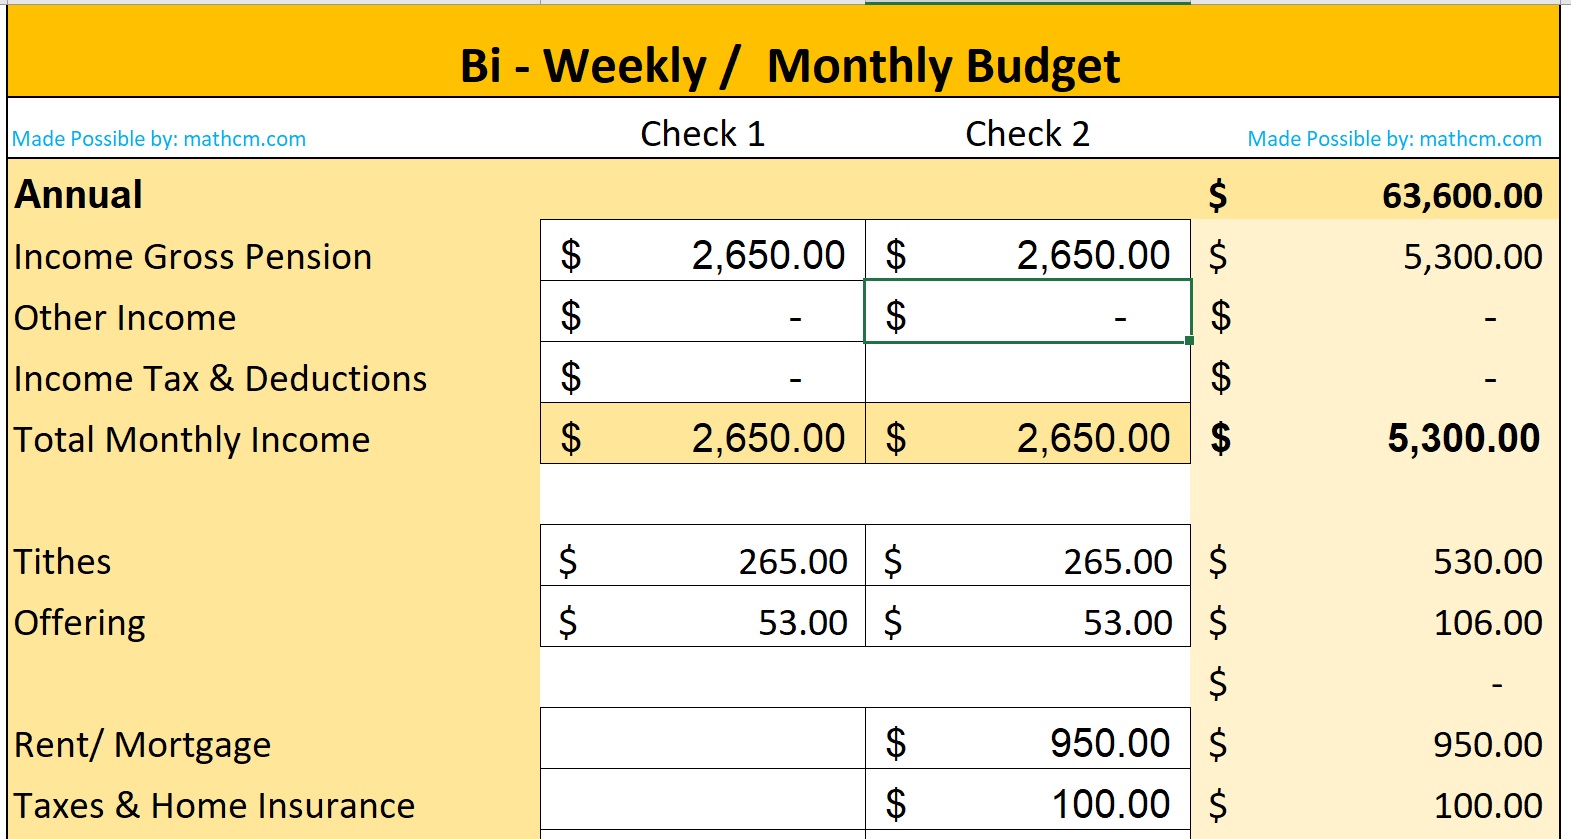 bi weekly budget calculator